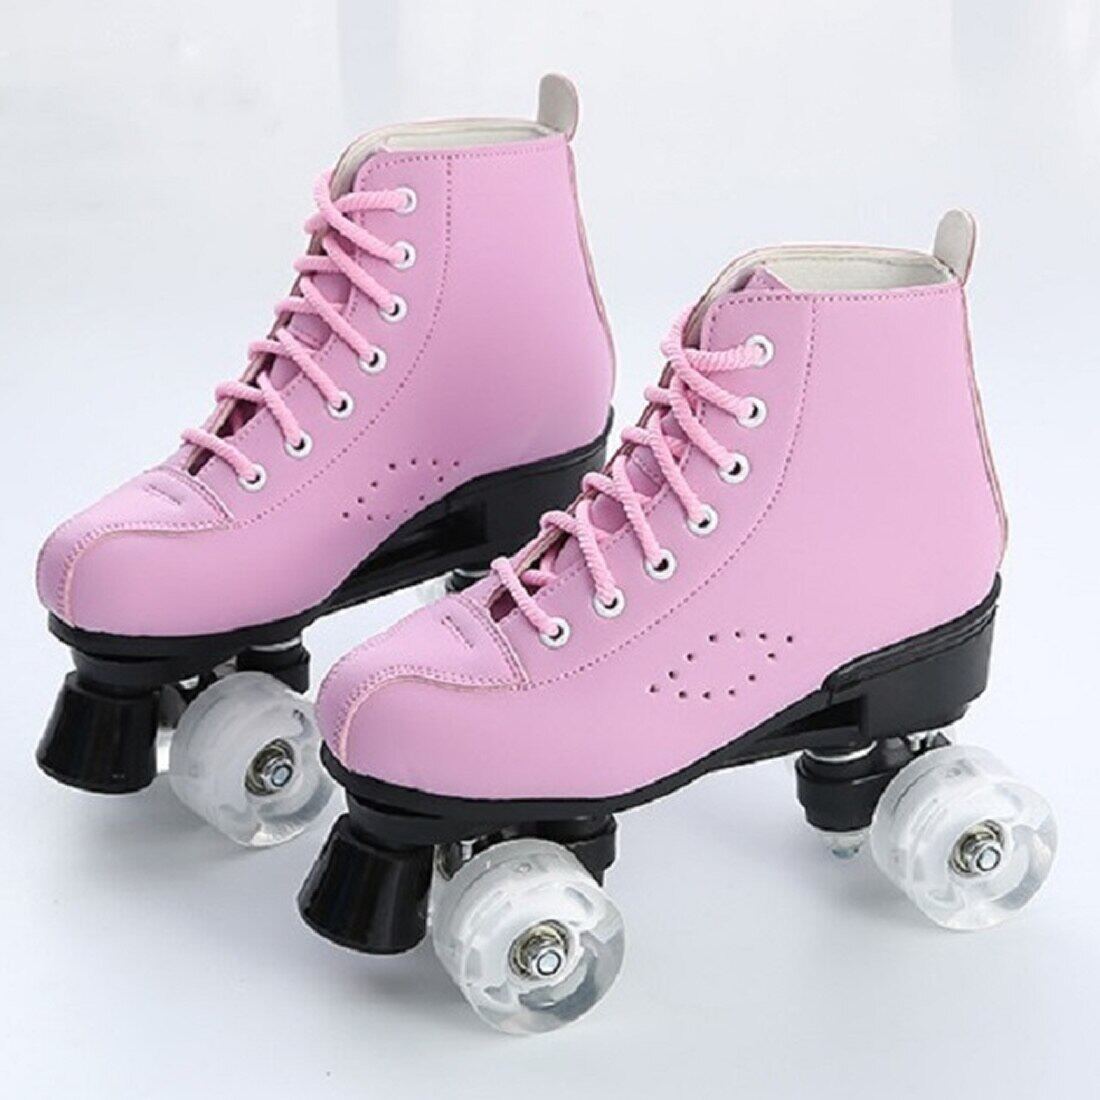 roller skates 4 wheels in a row